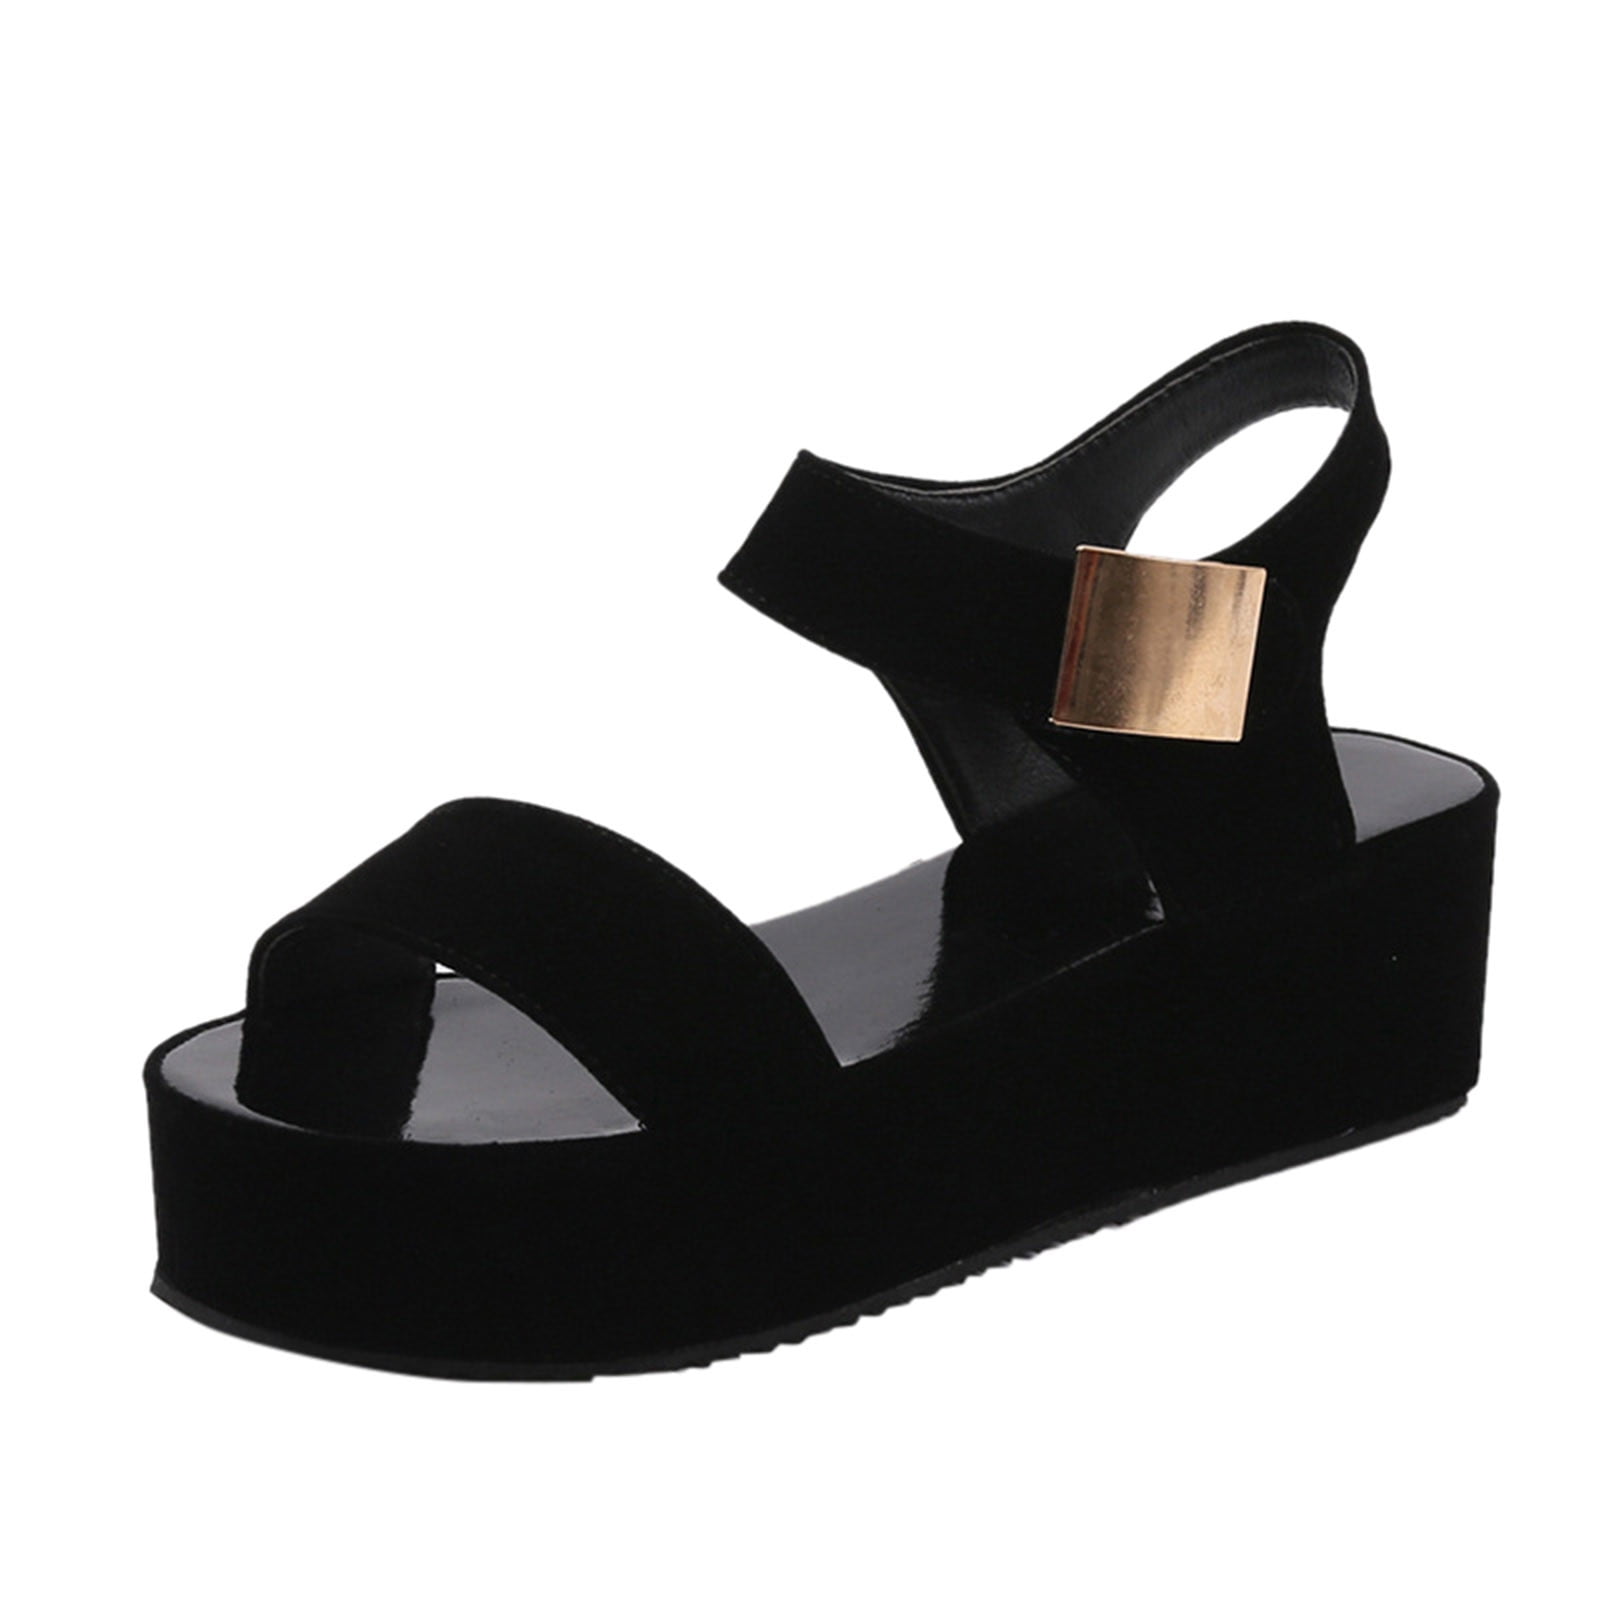 WANYNG Women s Fashion Platform Wedge Heels Large Size Colorblock Roman Sandals Women Shoes Summer Women Sandals Size 12 Wide 6727041f 4fac 4866 ad05 f4cc861ae100.c9b556f37082d337a4e9417f1b19540d